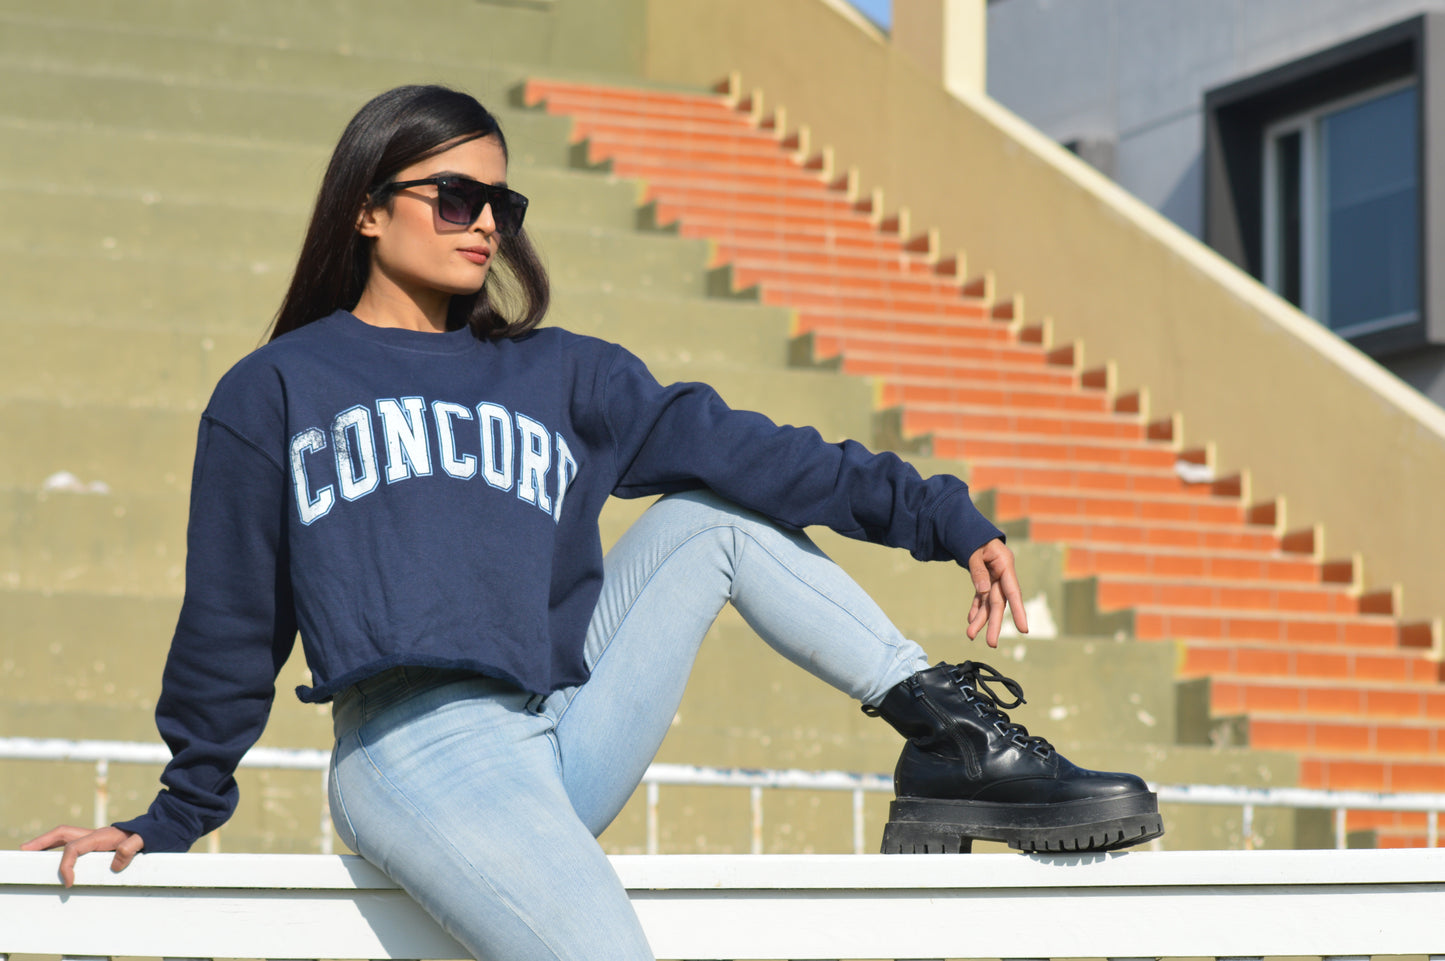 Concord Sweatshirt